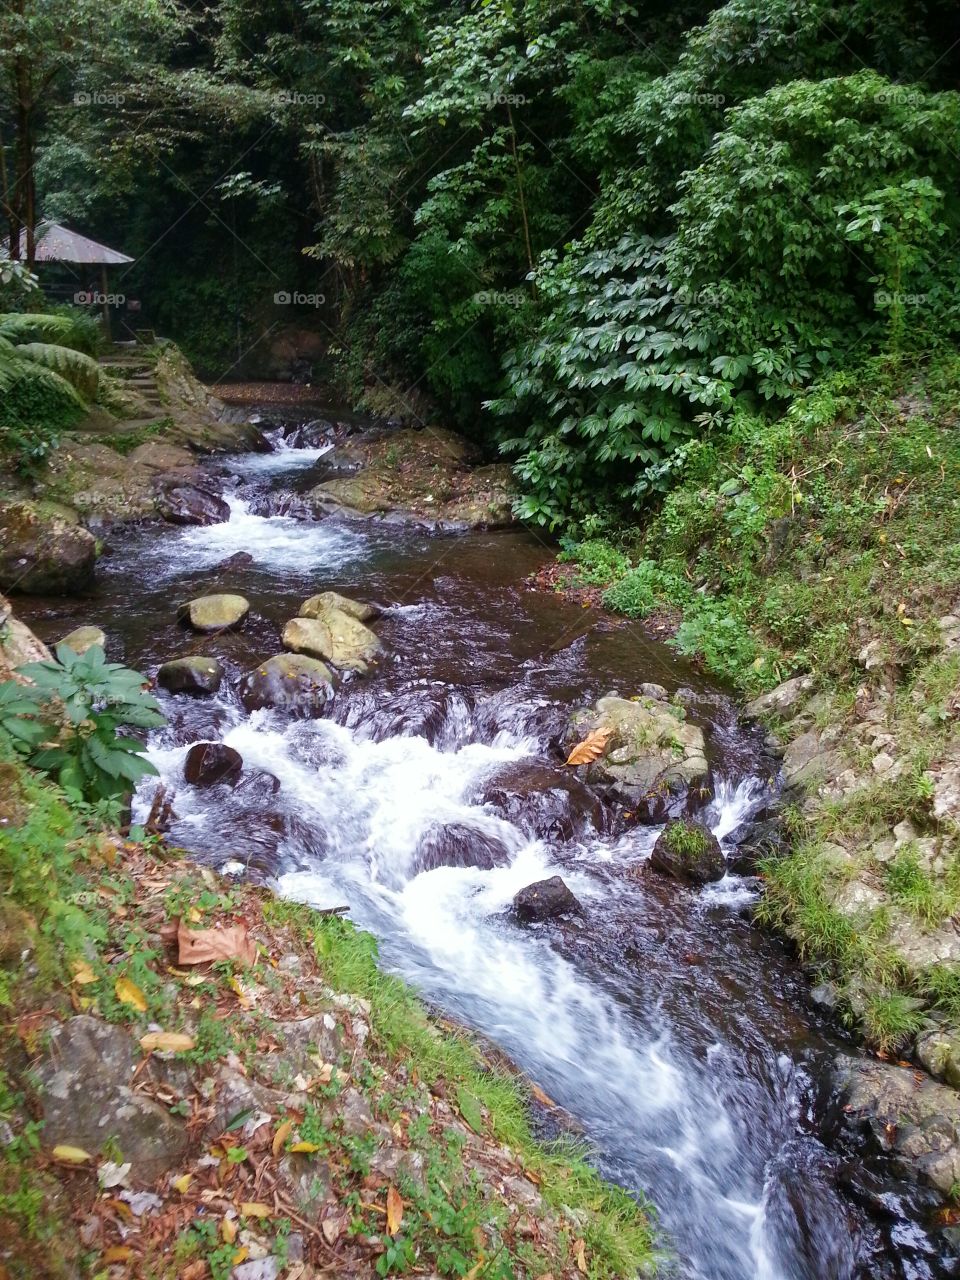 Flowing water of gitgit waterfall, Bali